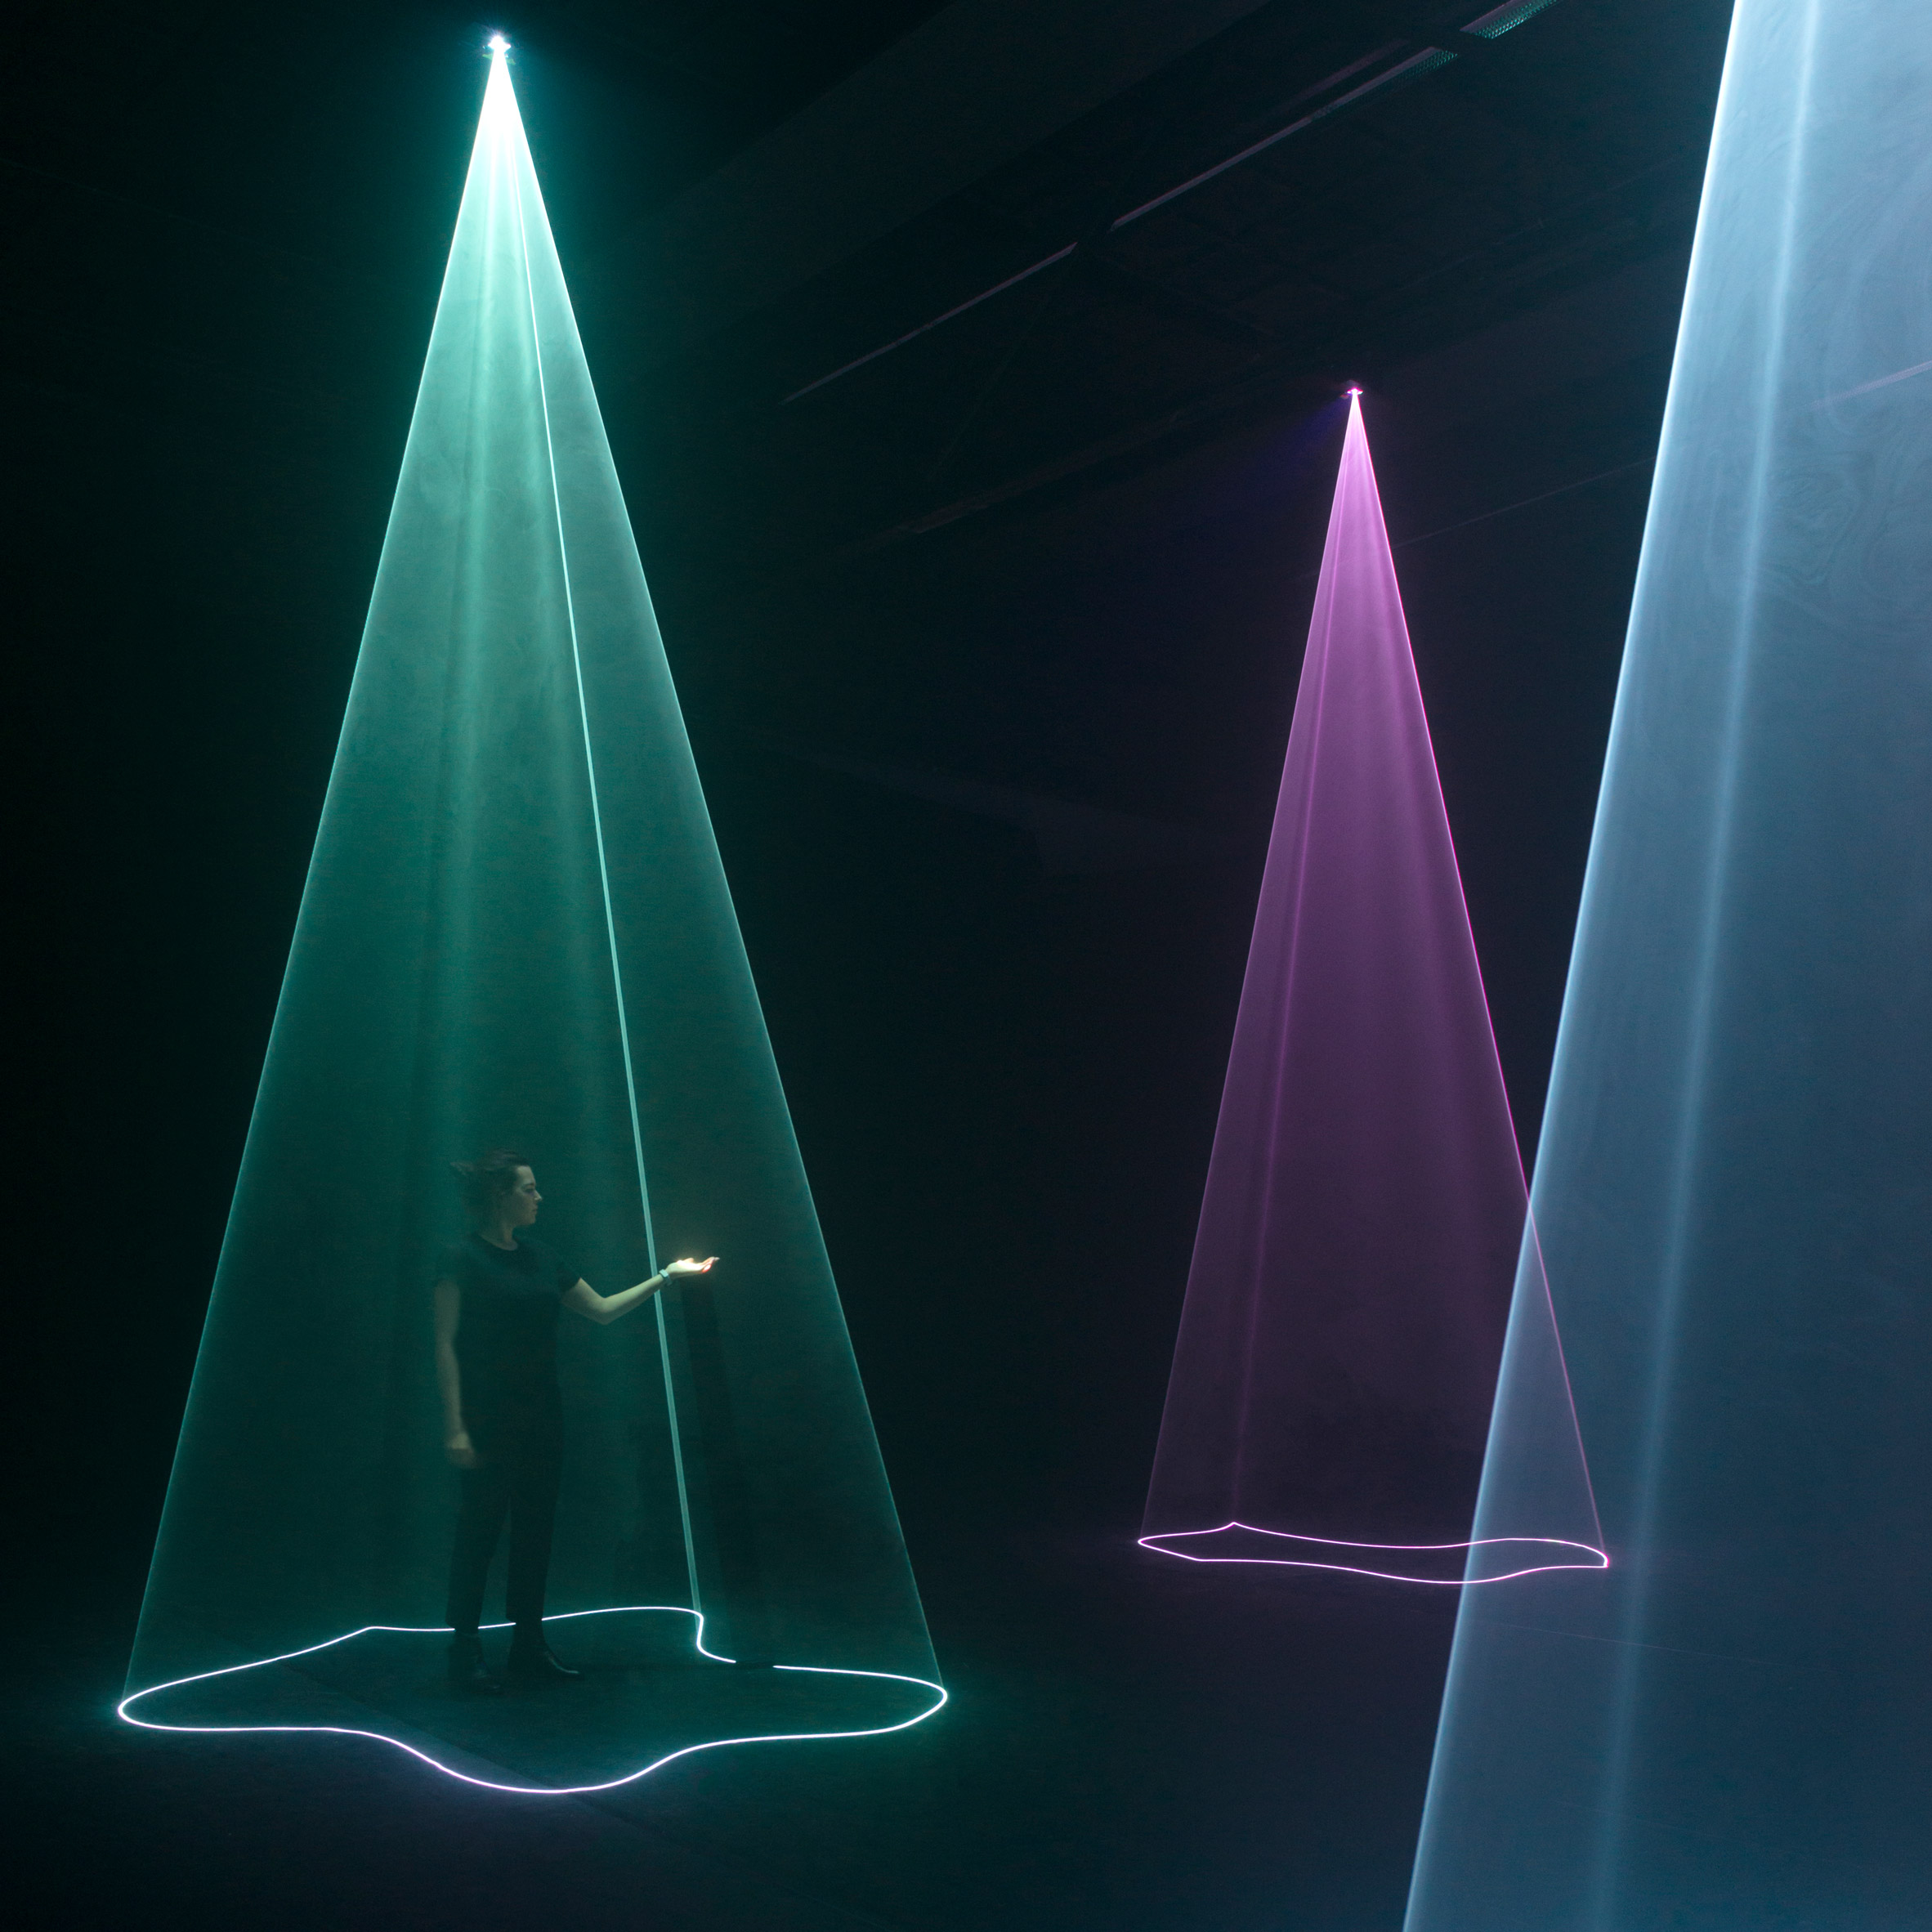 Audiovisual installation transforms emotions into beams of light-9